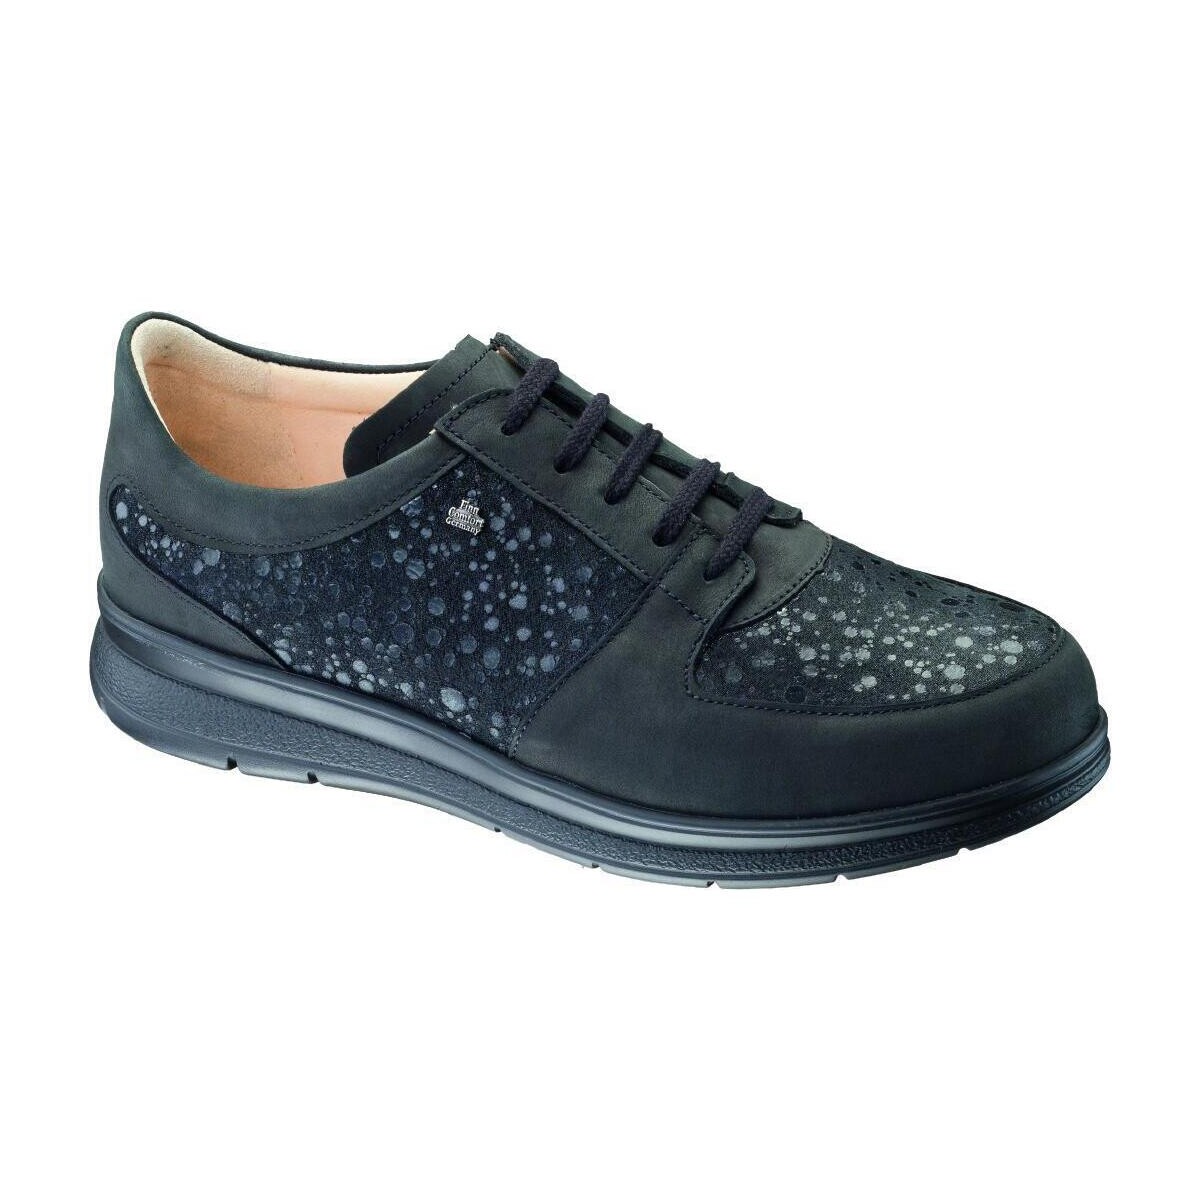 Zapatos Mujer Zapatillas bajas Finn Comfort 3750901654 Negro